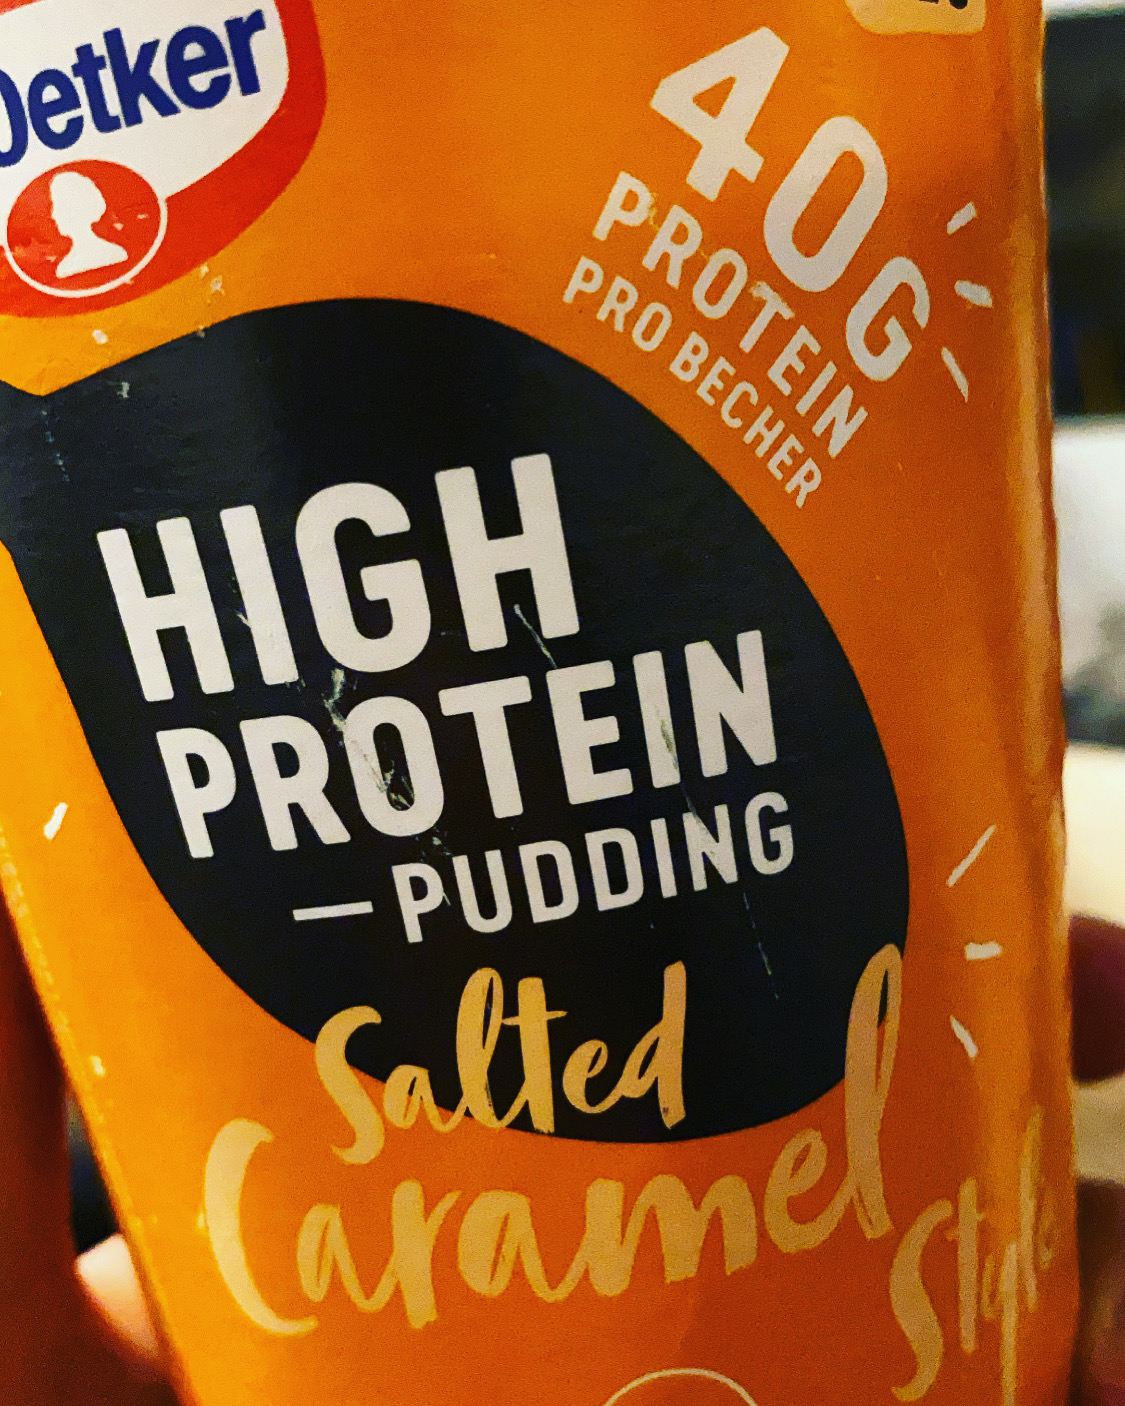 Produkttest - Dr. Oetker High Protein Pudding Salted Caramel Style